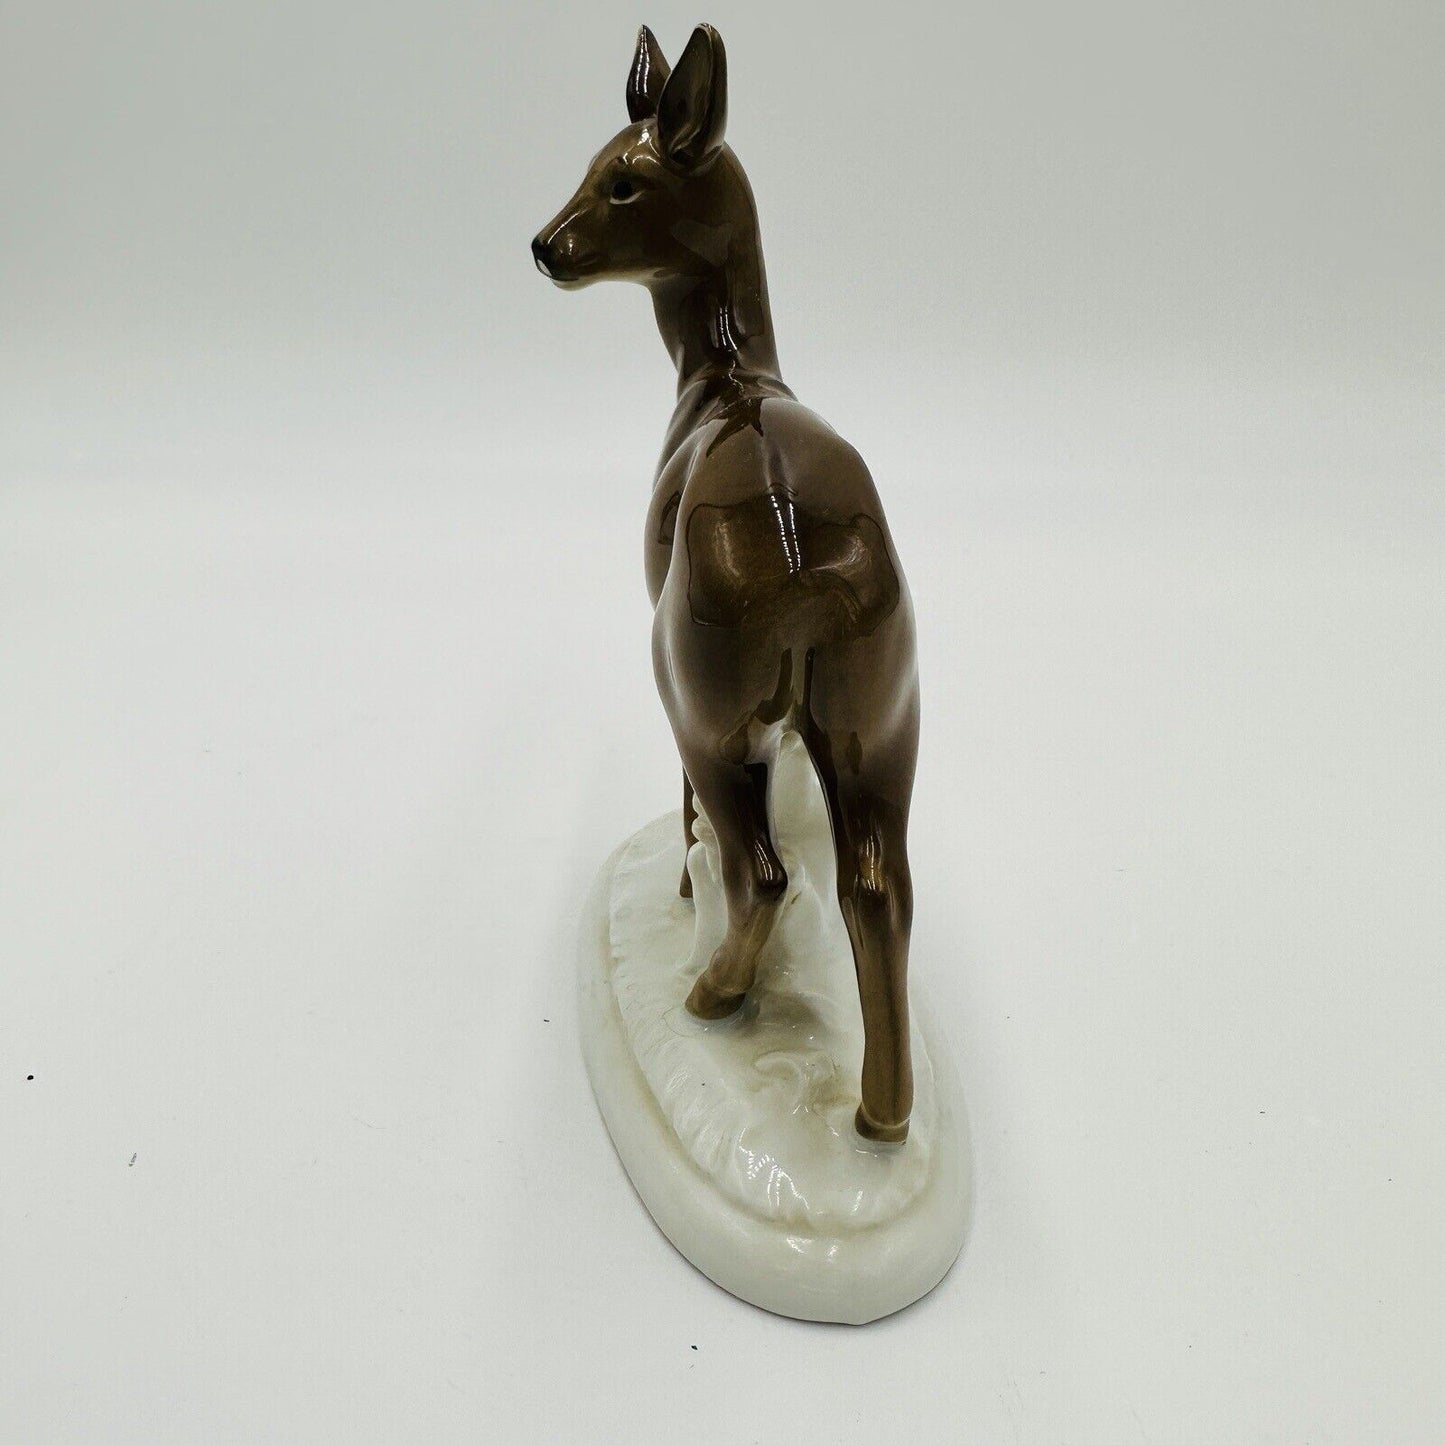 Gerold Porzellan Deer Figurine Porcelain Bavaria Germany Glossy Brown Vintage